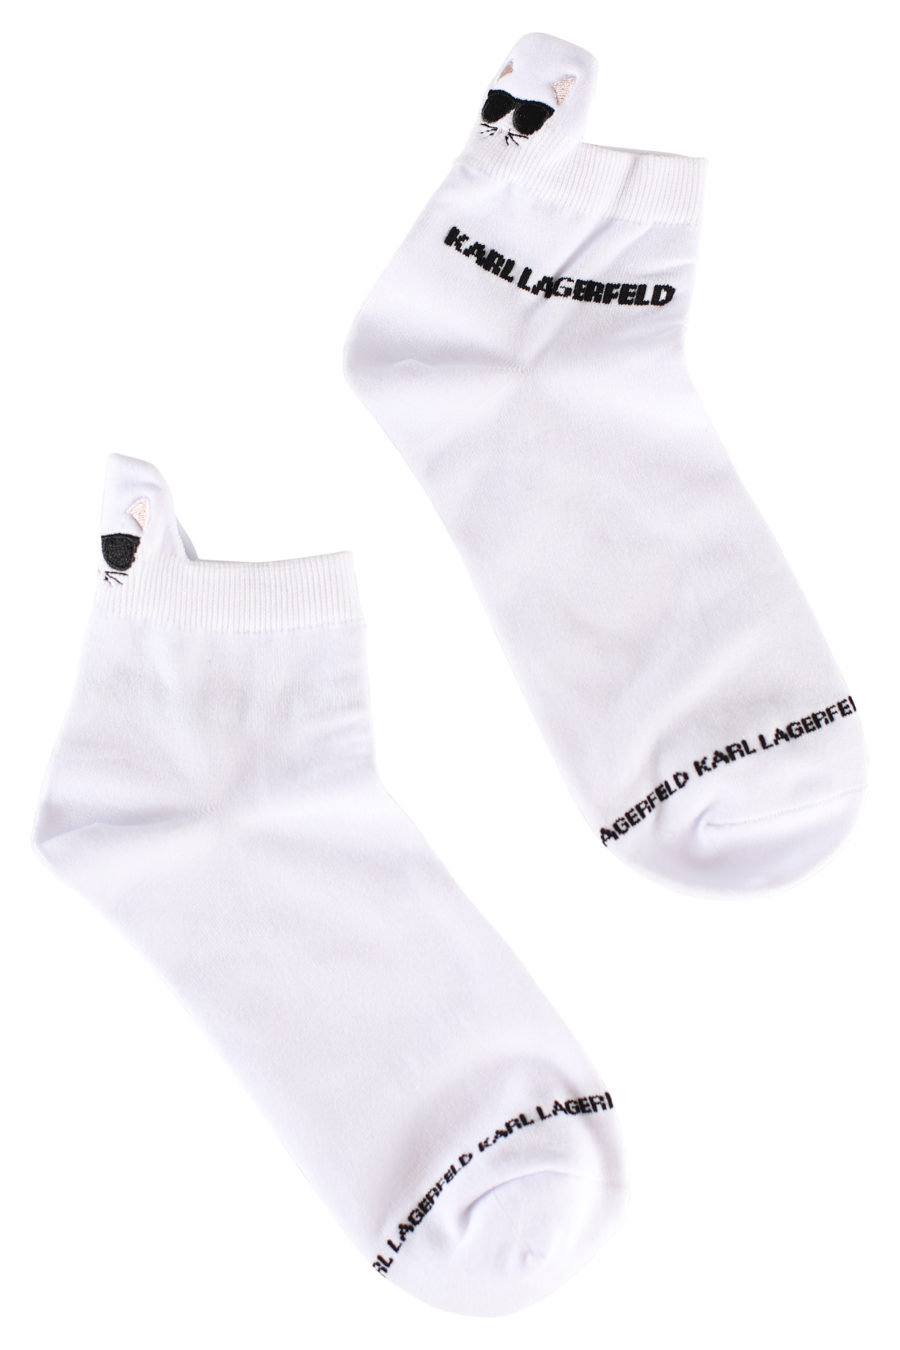 Pack de 2 calcetines bordados - IMG 1873